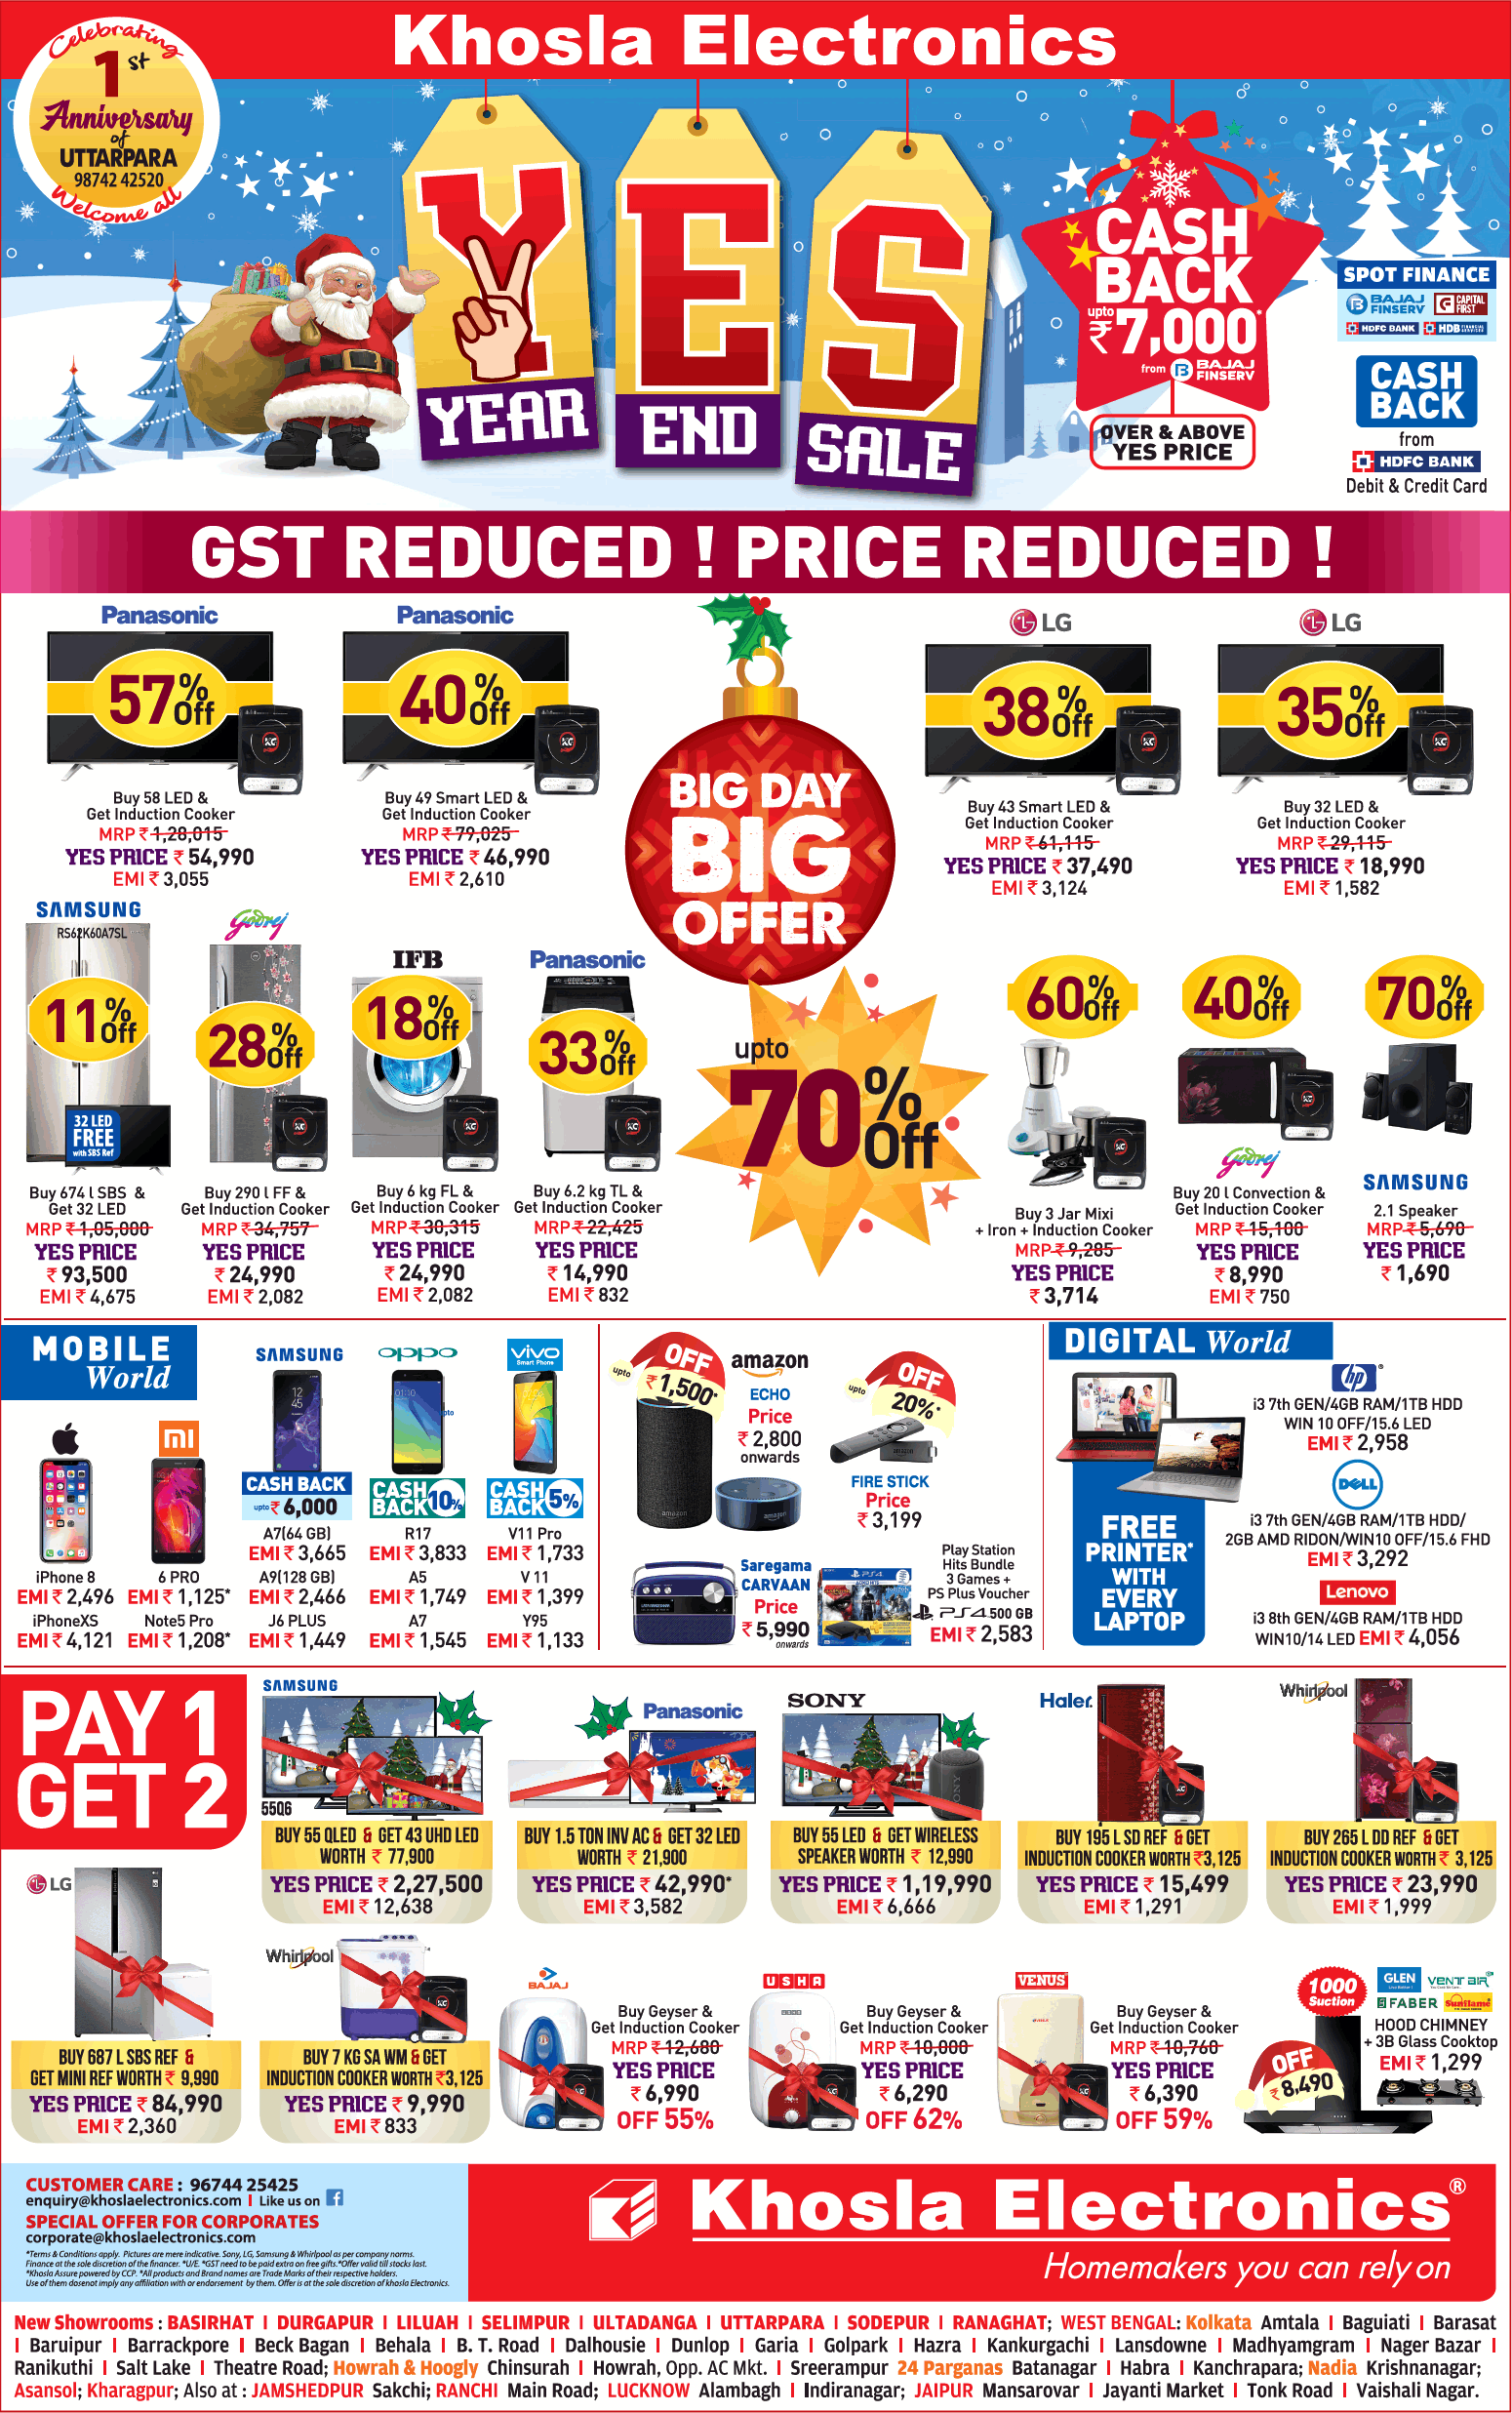 khosla-electronics-year-end-sale-big-day-big-offer-ad-calcutta-times-27-12-2018.png